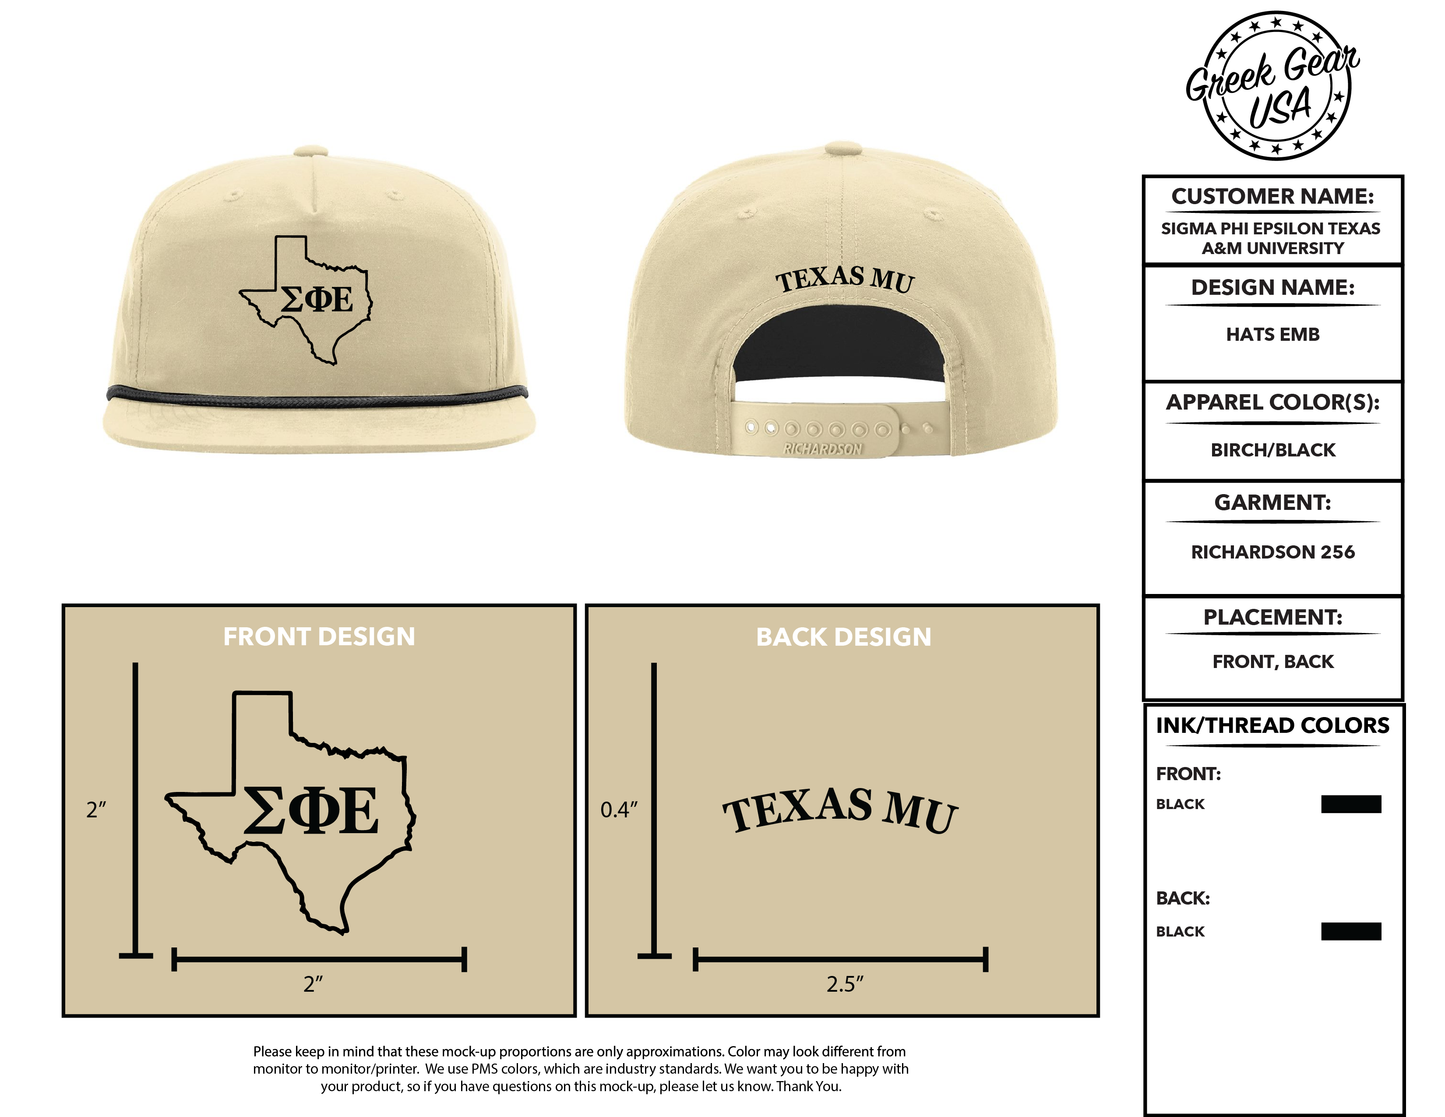 Sigma Phi Epsilon Texas A&M University Rope Hats